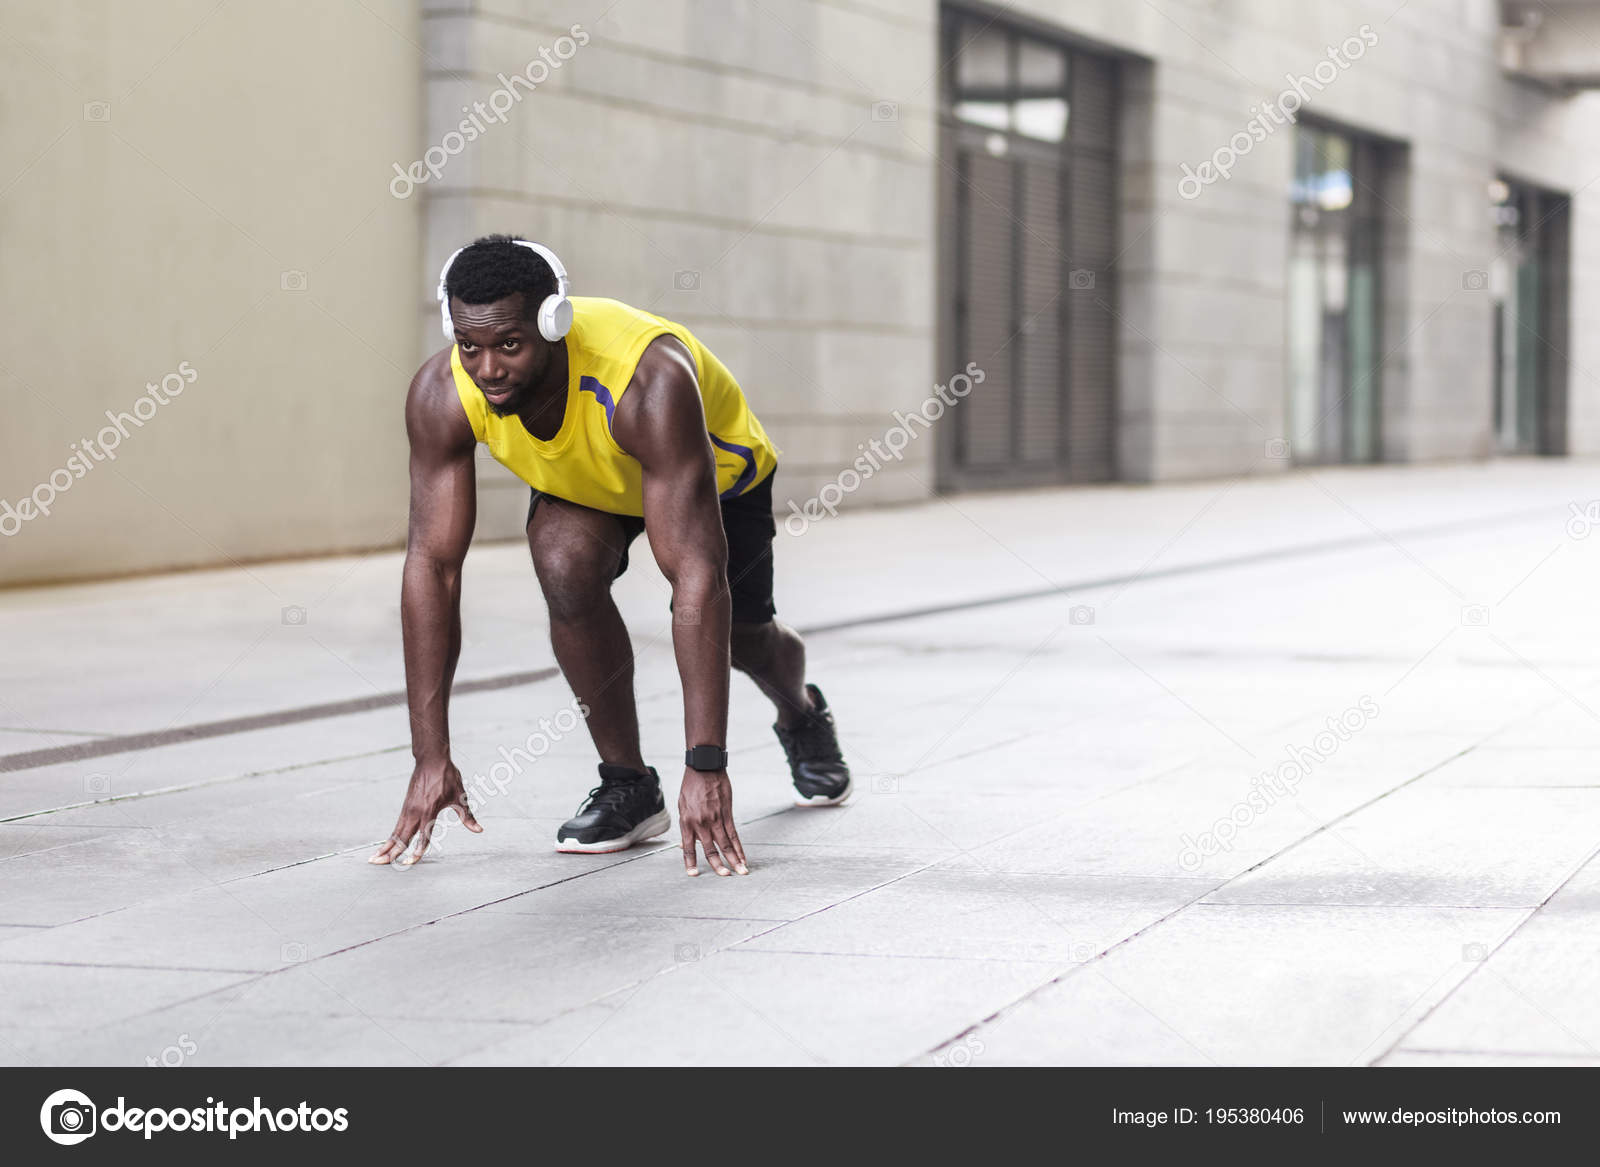 Premium Vector | Running man athlete pose illustration